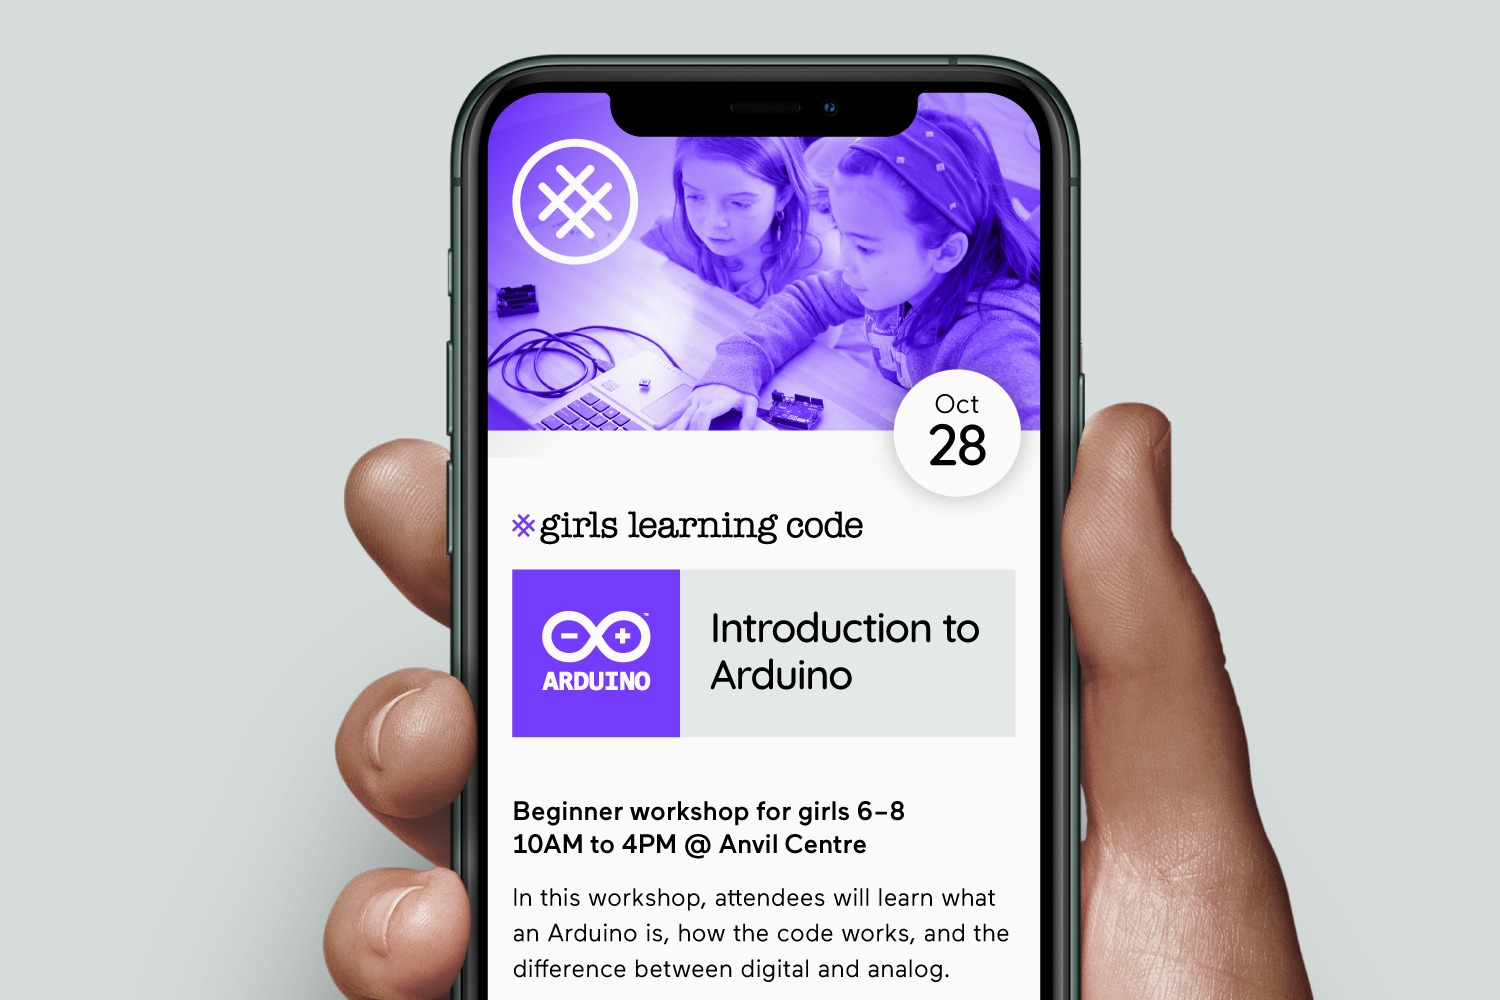 Example digital design promoting a Girls Learning Code workshop event